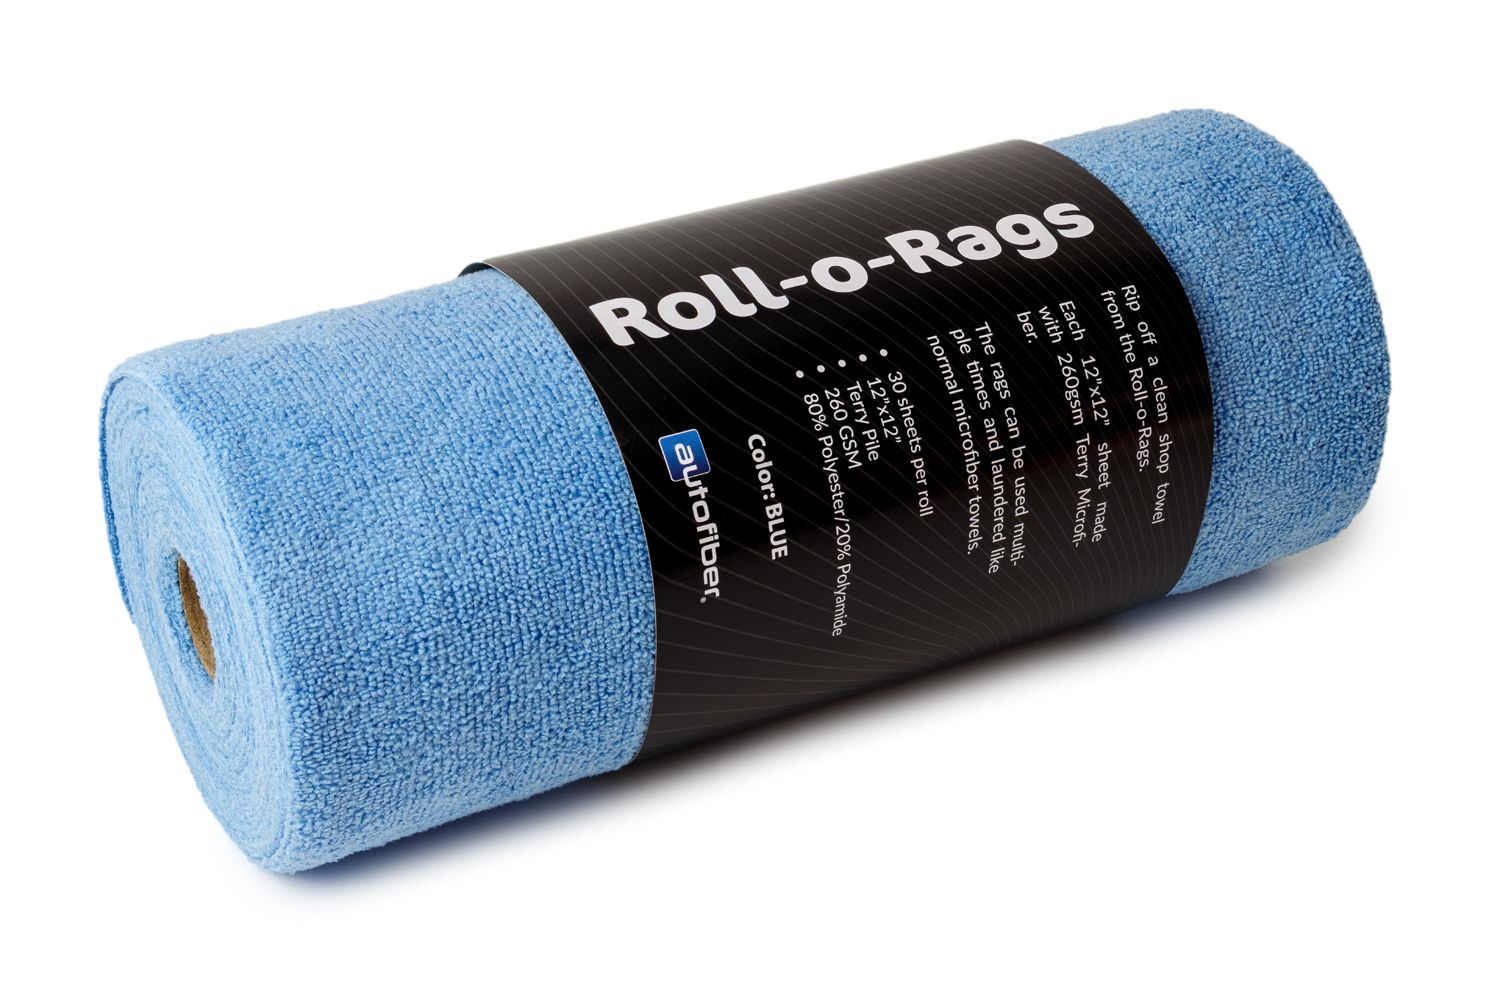 Autofiber [Roll-o-Rags] Microfiber Towels on a Roll 12"x12" - 30/roll *PRE-ORDER*